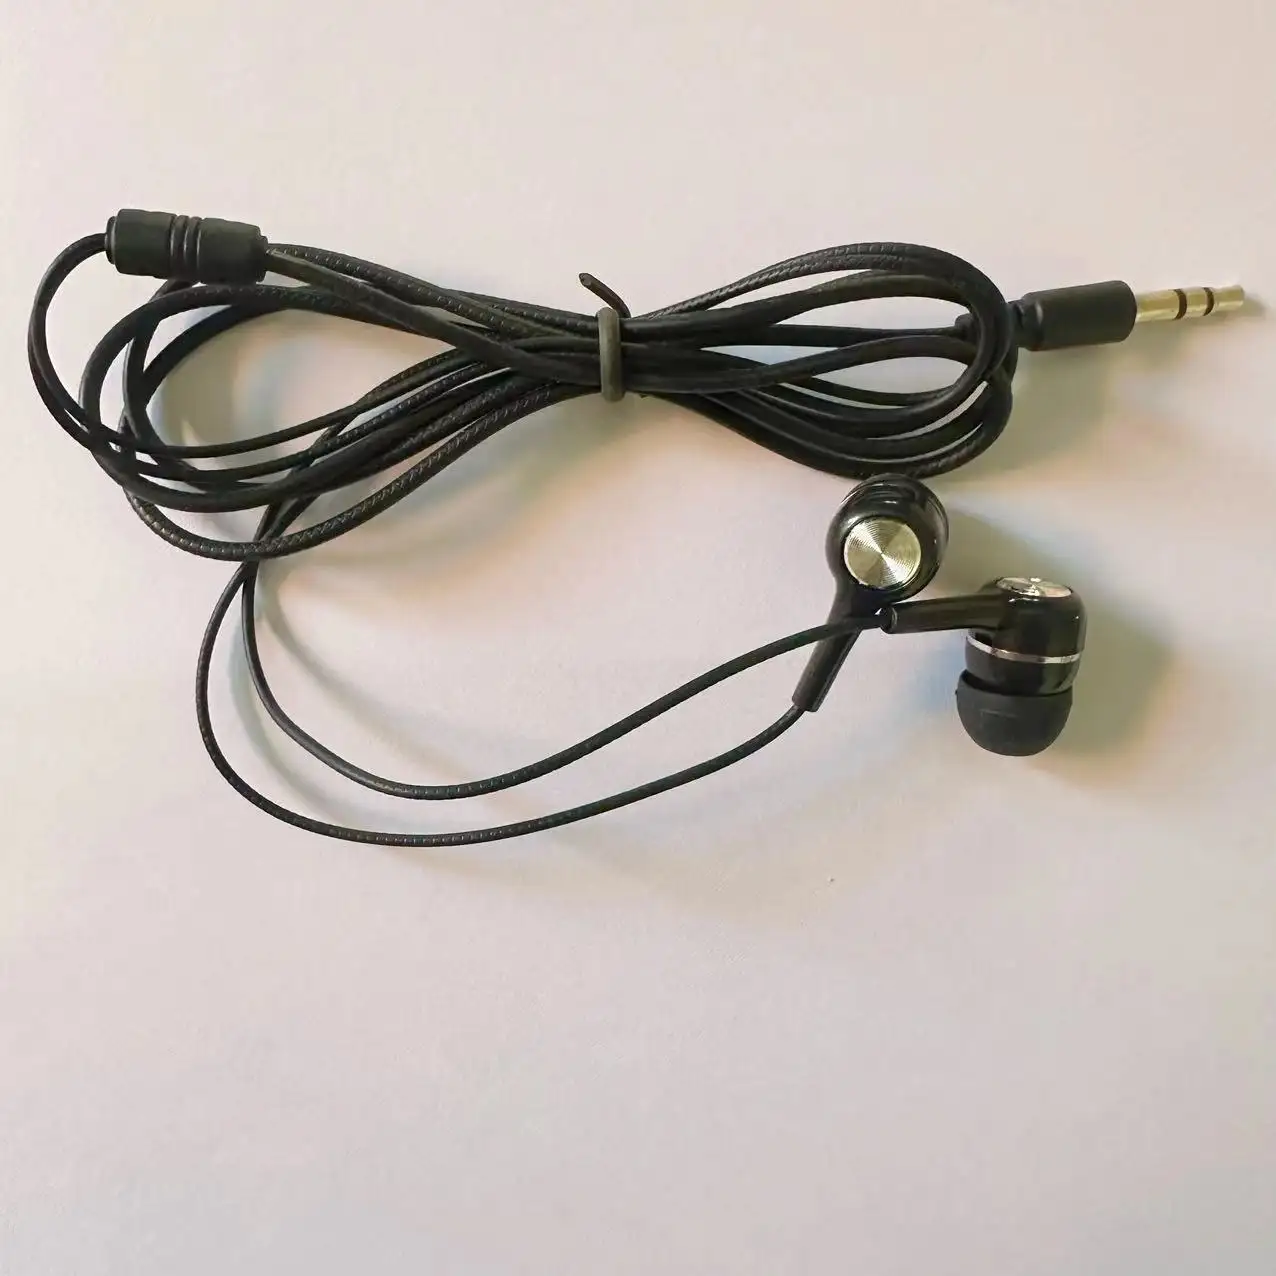 Cable 3,5mm Colorido Deporte Gaming Auricular 3,5mm Auriculares con cable Desechables Línea aérea Auriculares baratos